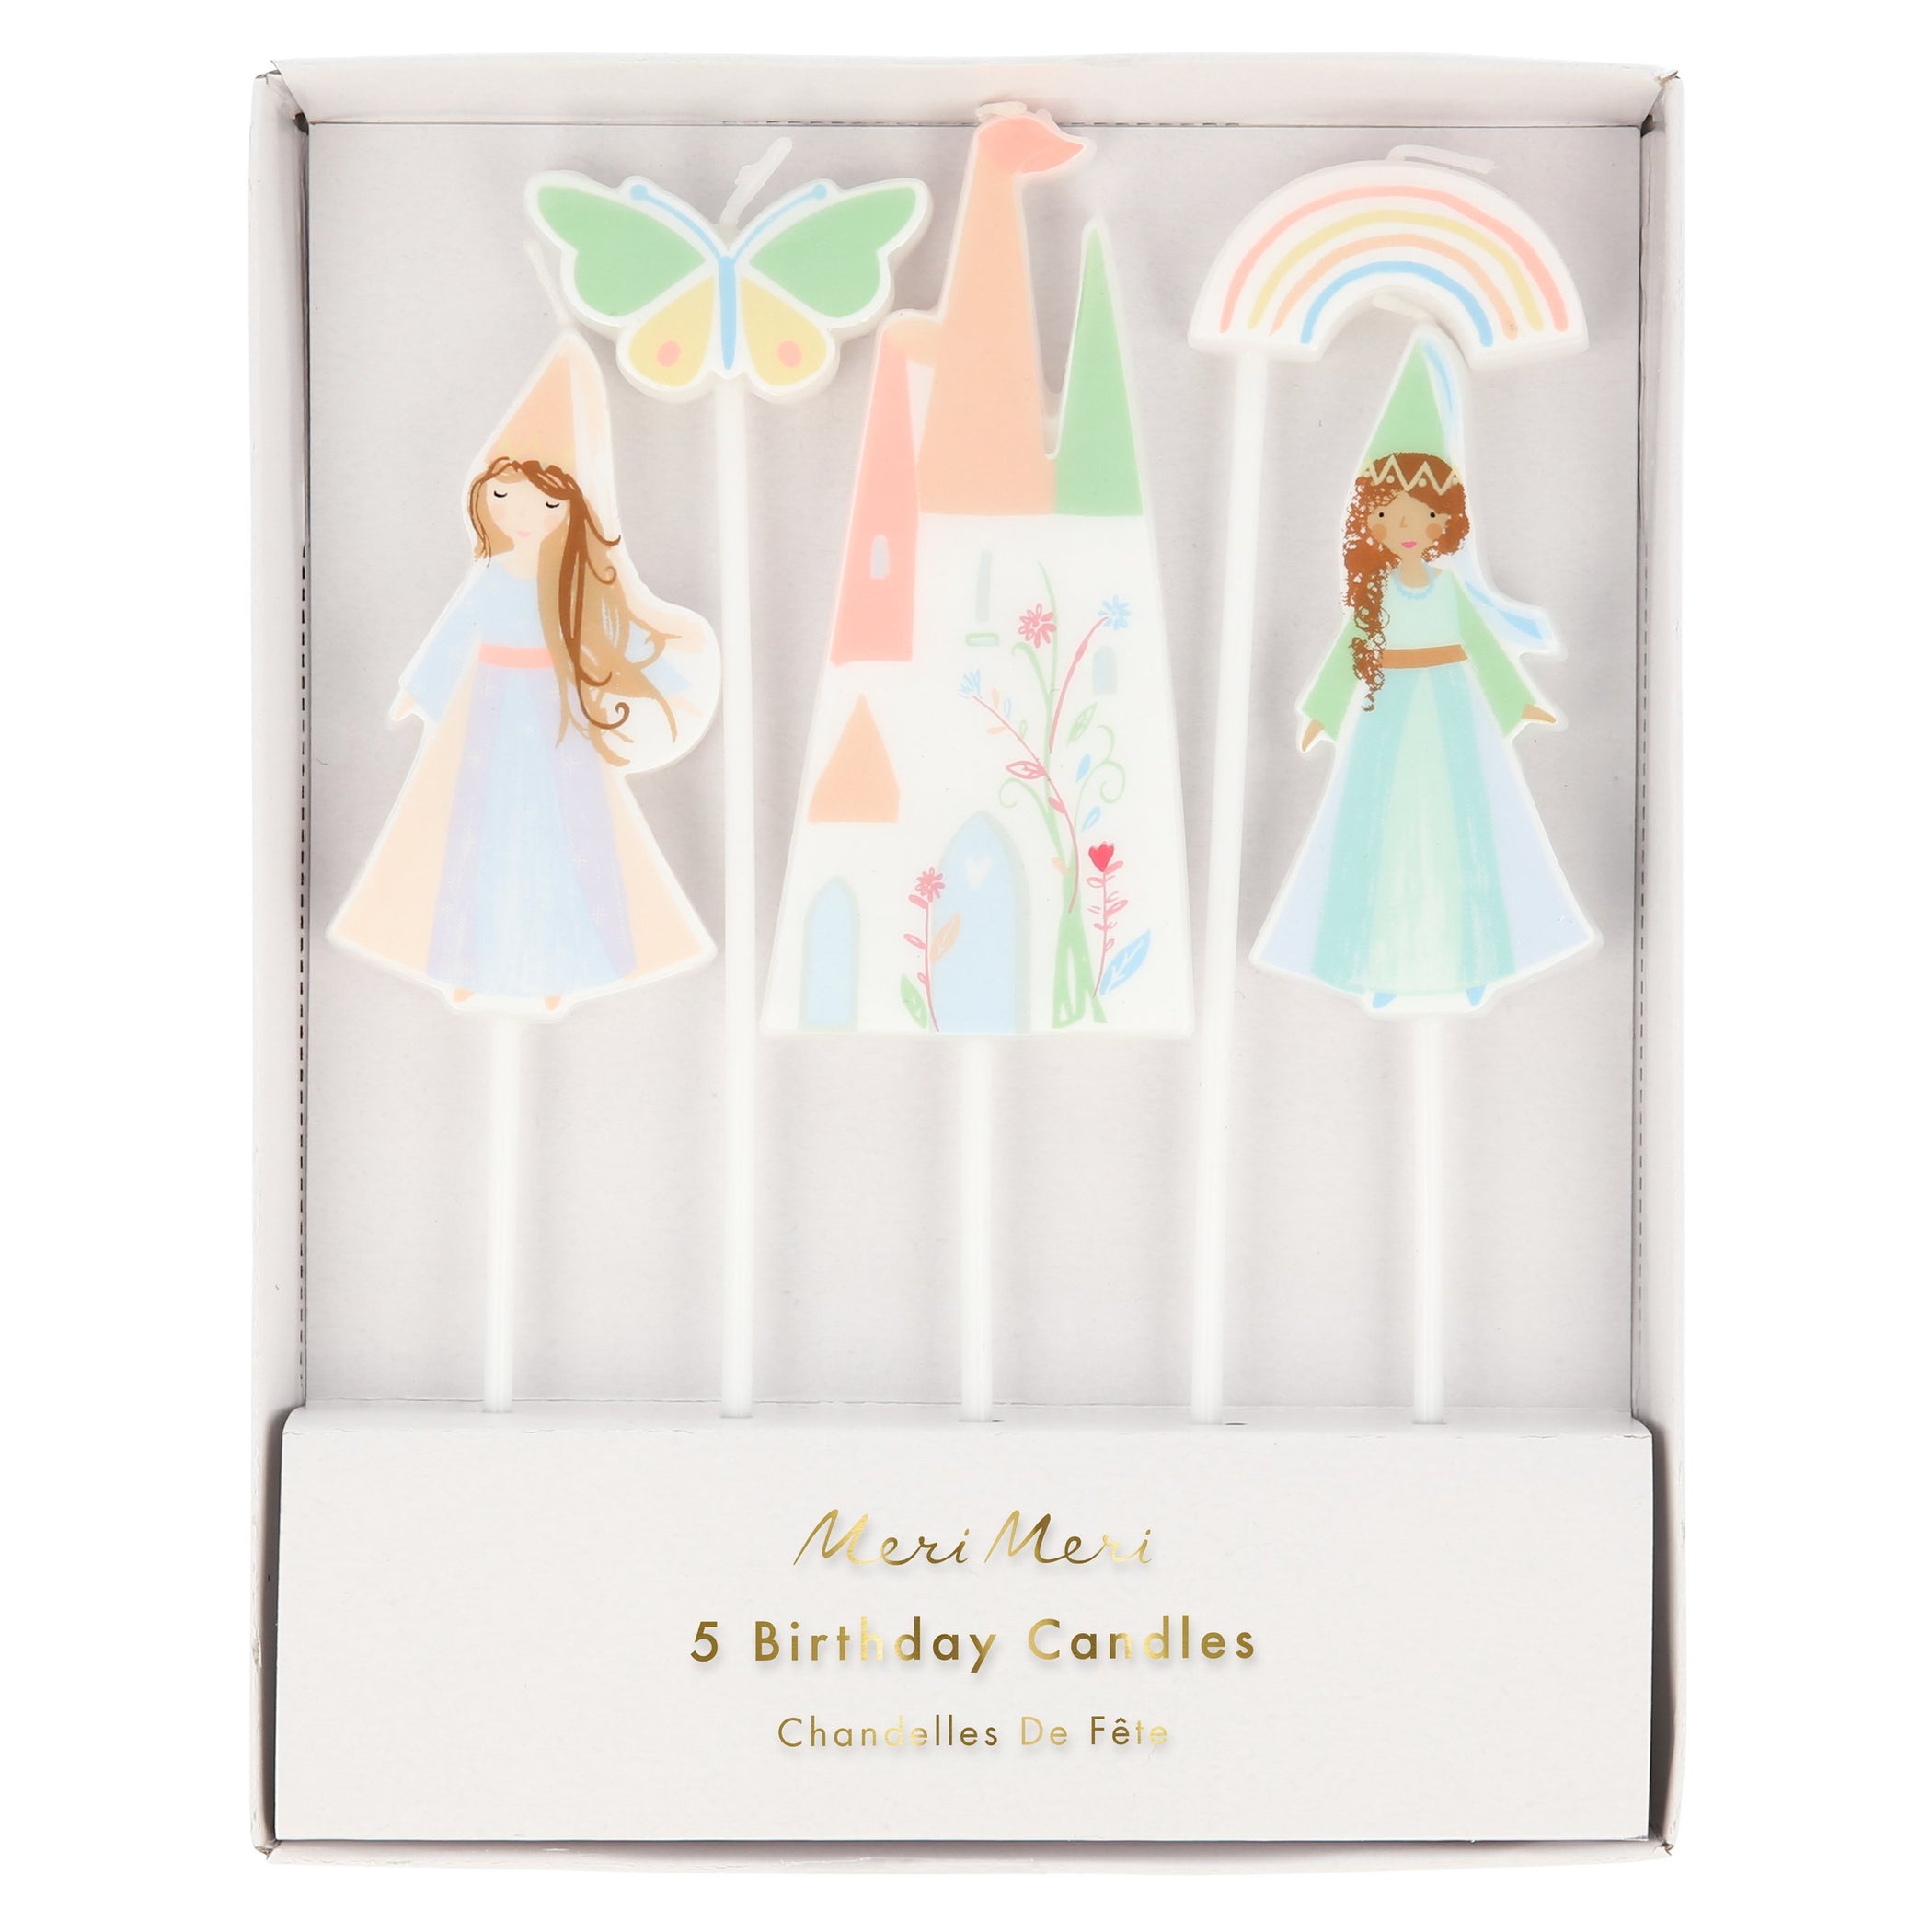 Magical Princess Candles (5 Pack)